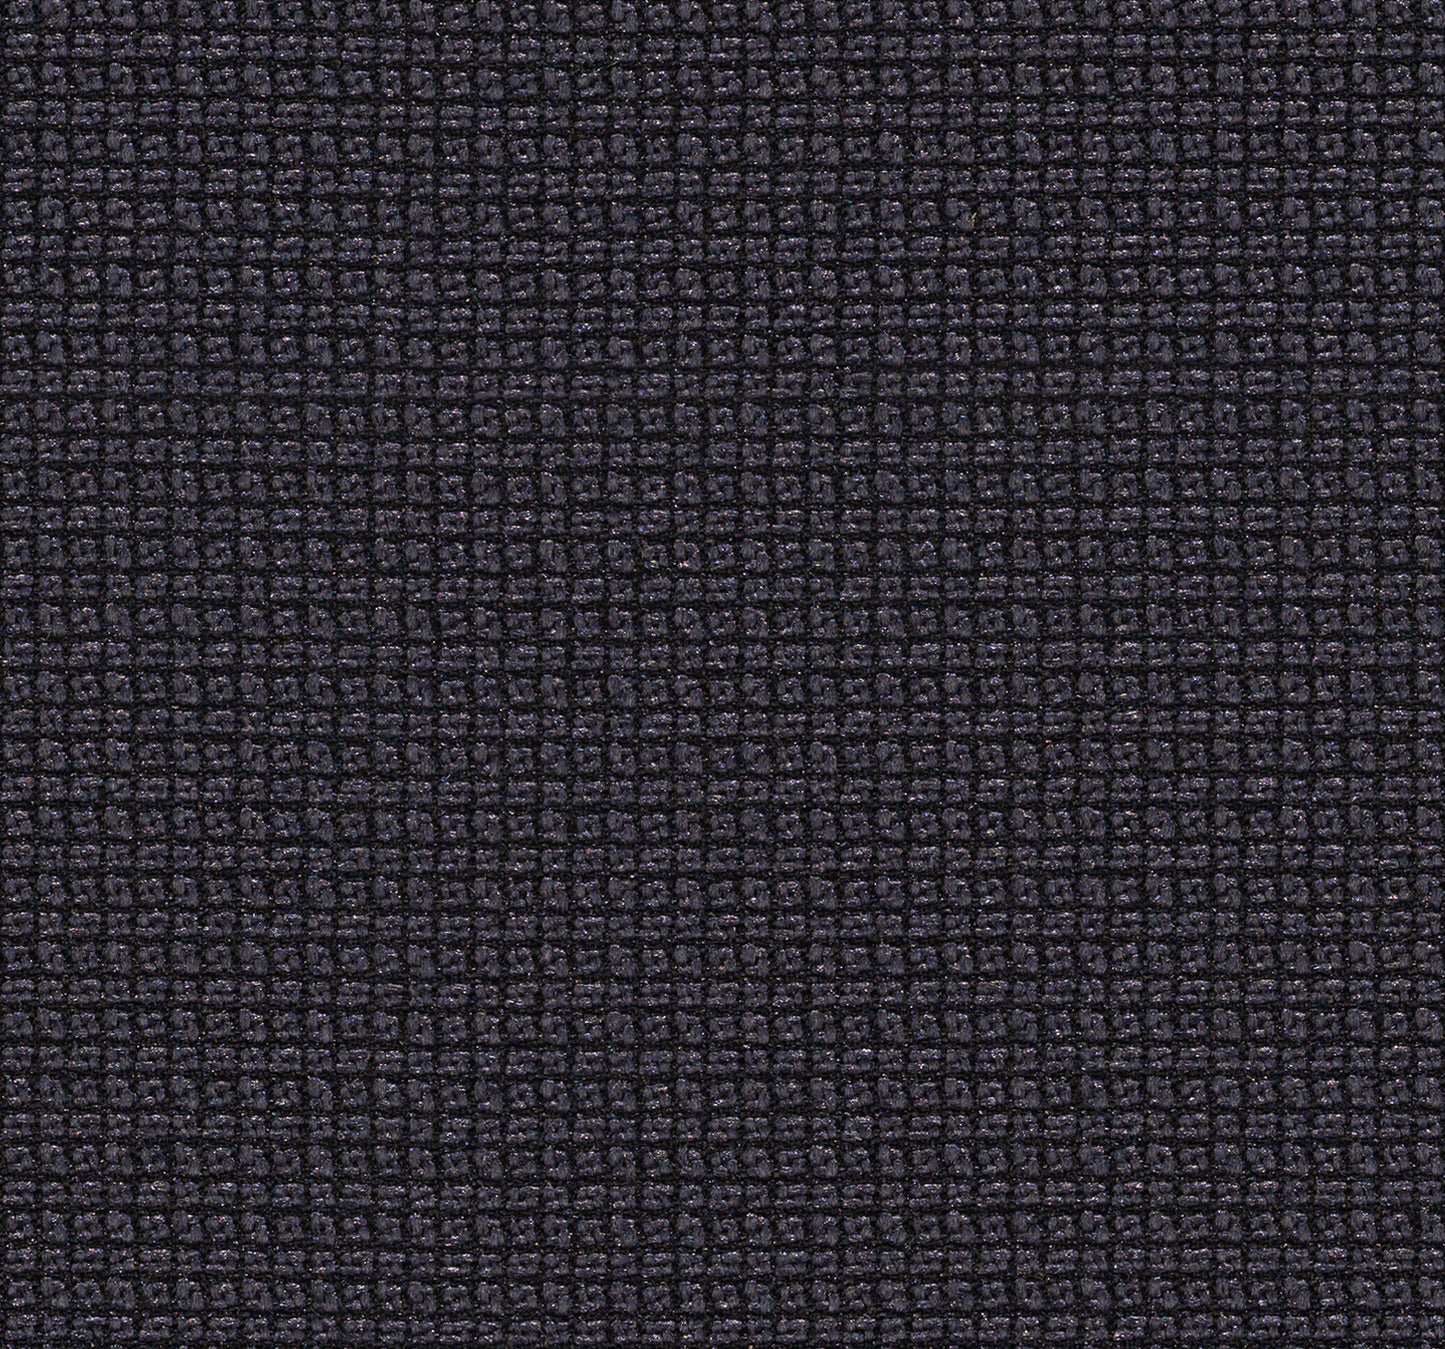 Maharam Lariat Black Vinyl Fabric Fabric 440401-006BLACK